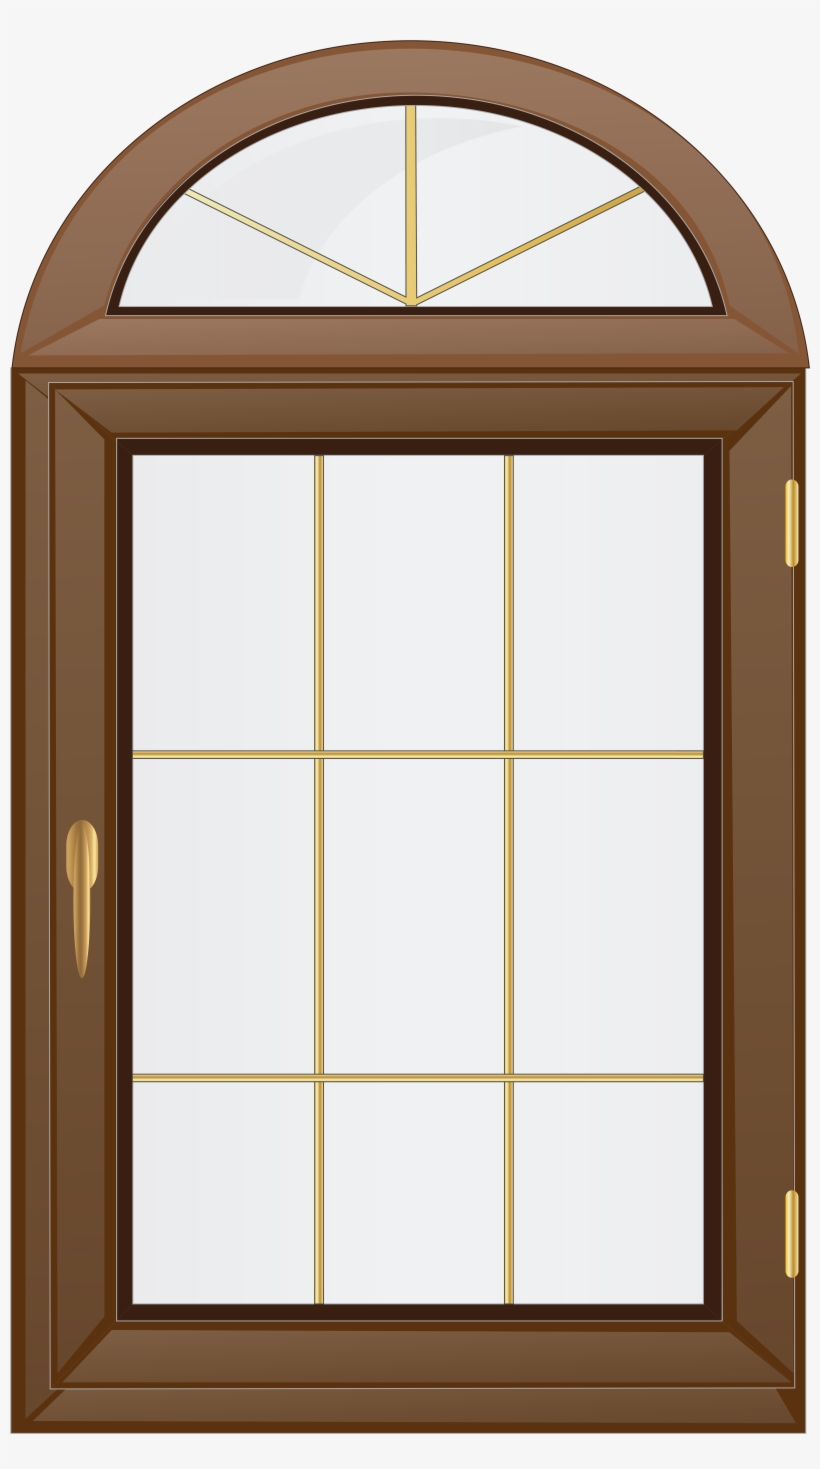 33 Amazing School Window Free Download - Window Png, transparent png #102488